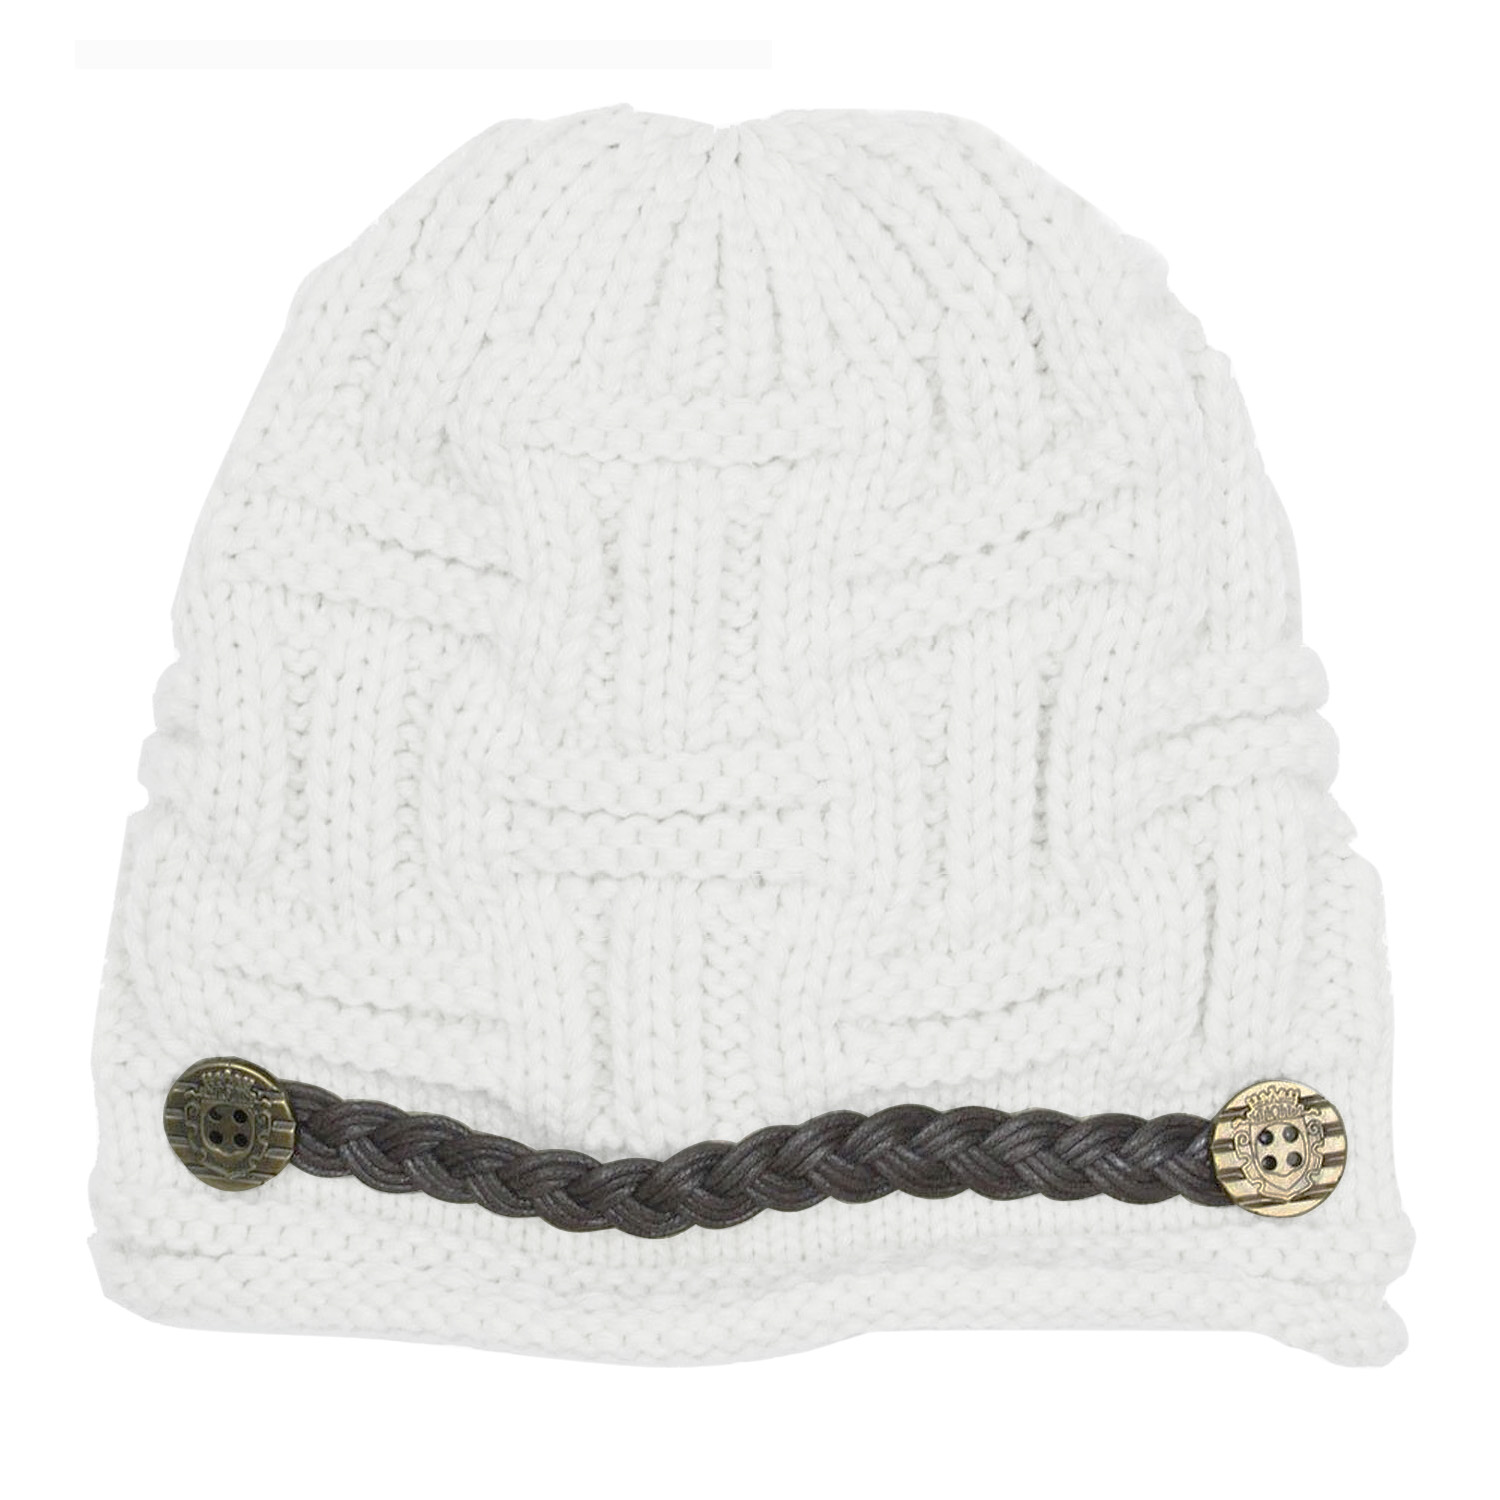 FS Hot New Women Baggy Beret Chunky Knit Knitted Braided Beanie Hat Ski Cap White